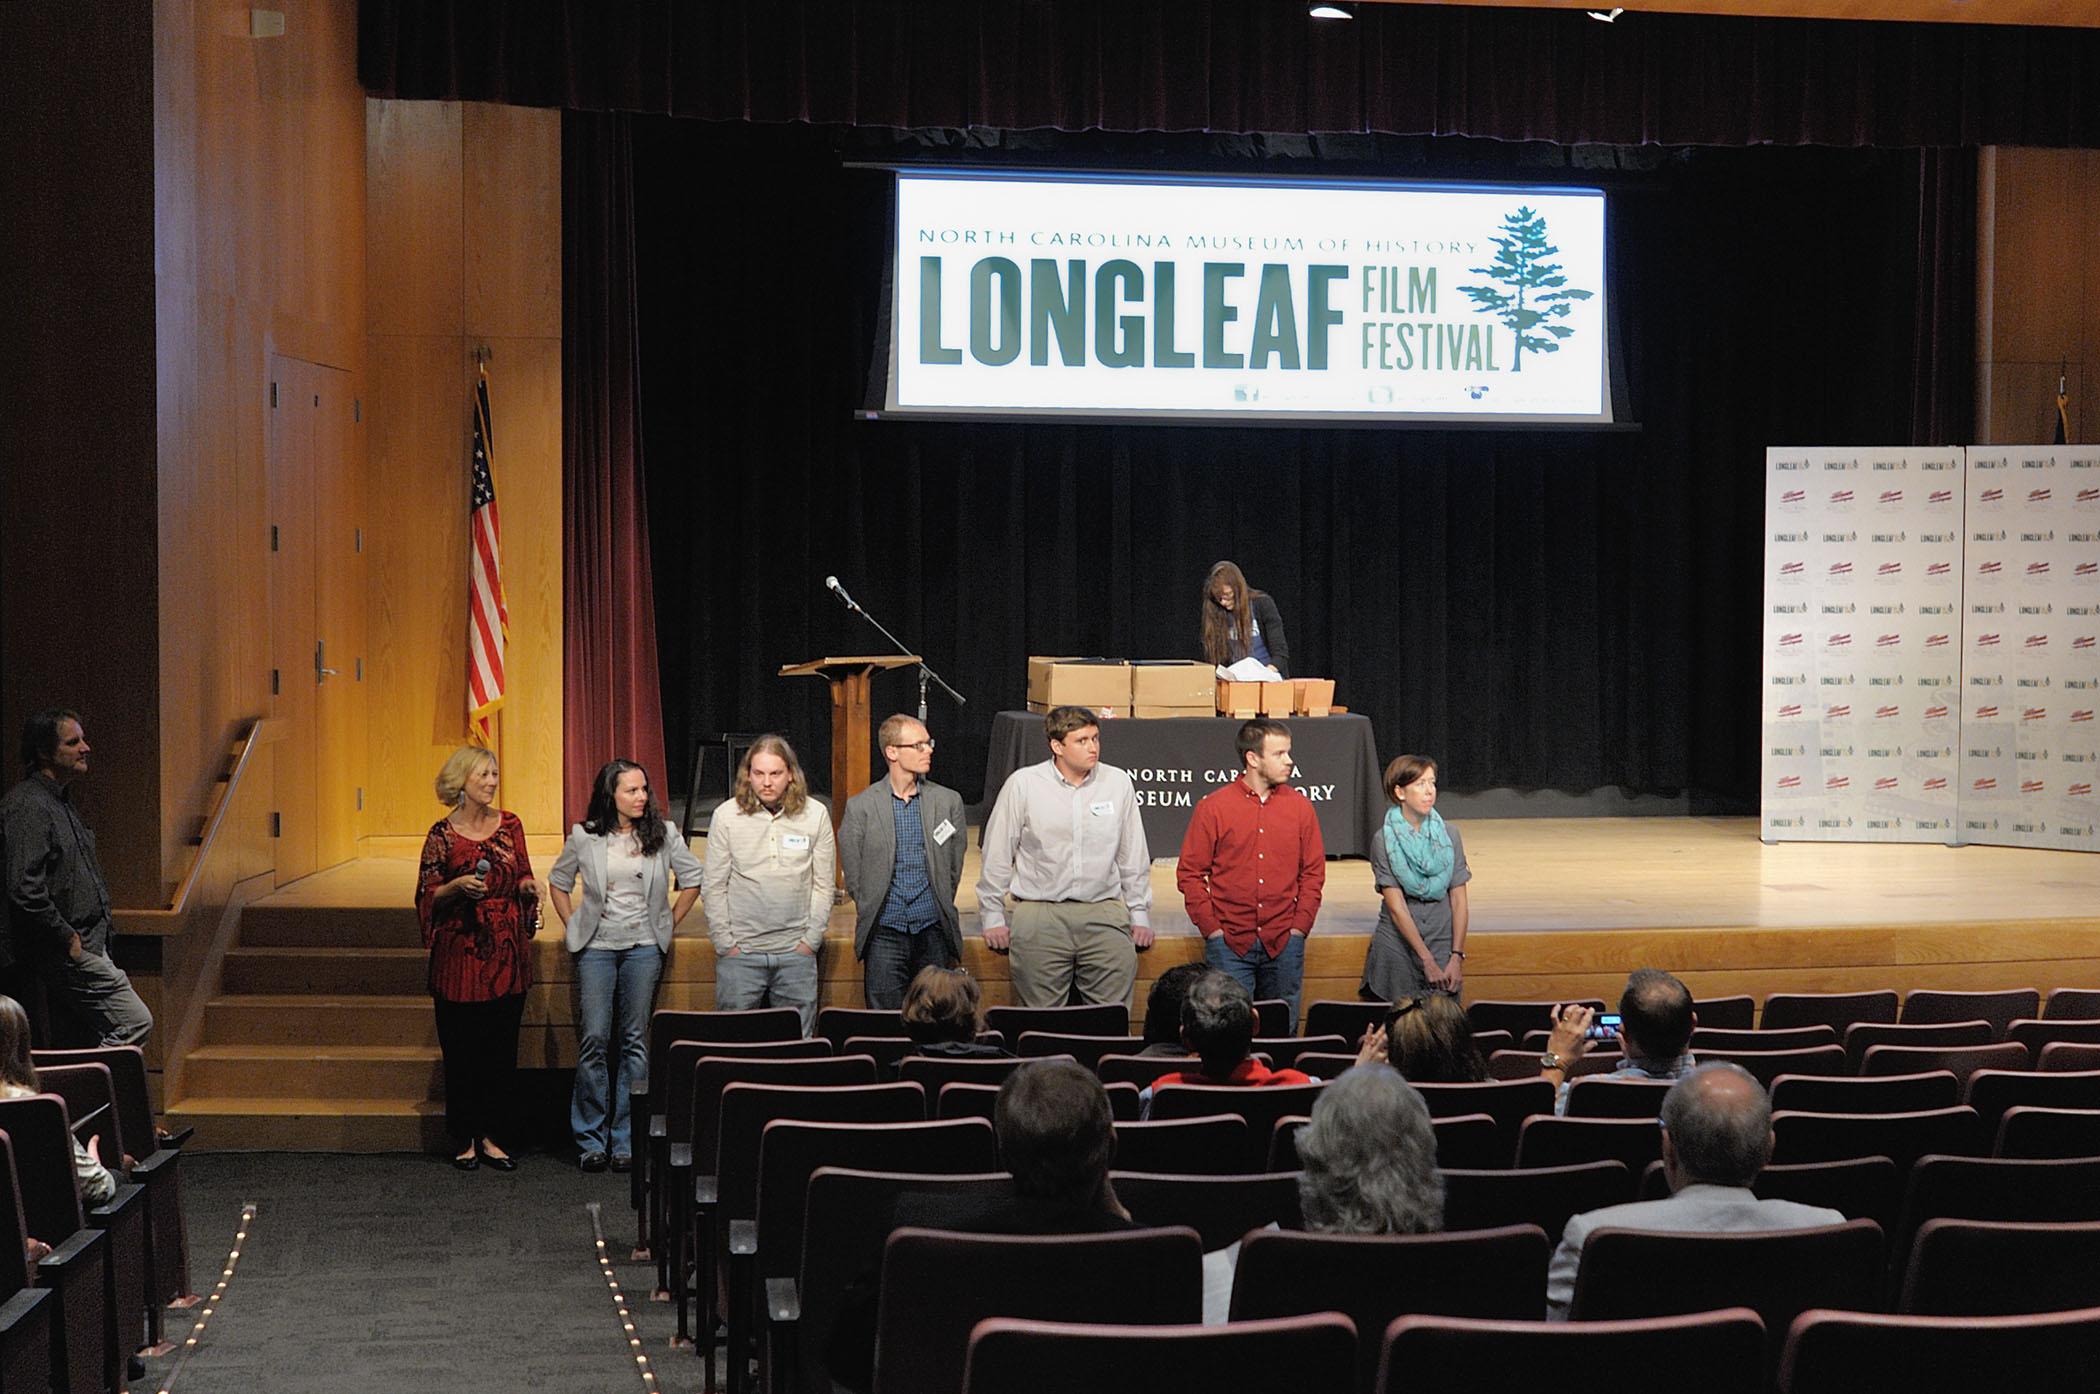 2017 Longleaf Film Festival: NC Museum of History, Raleigh